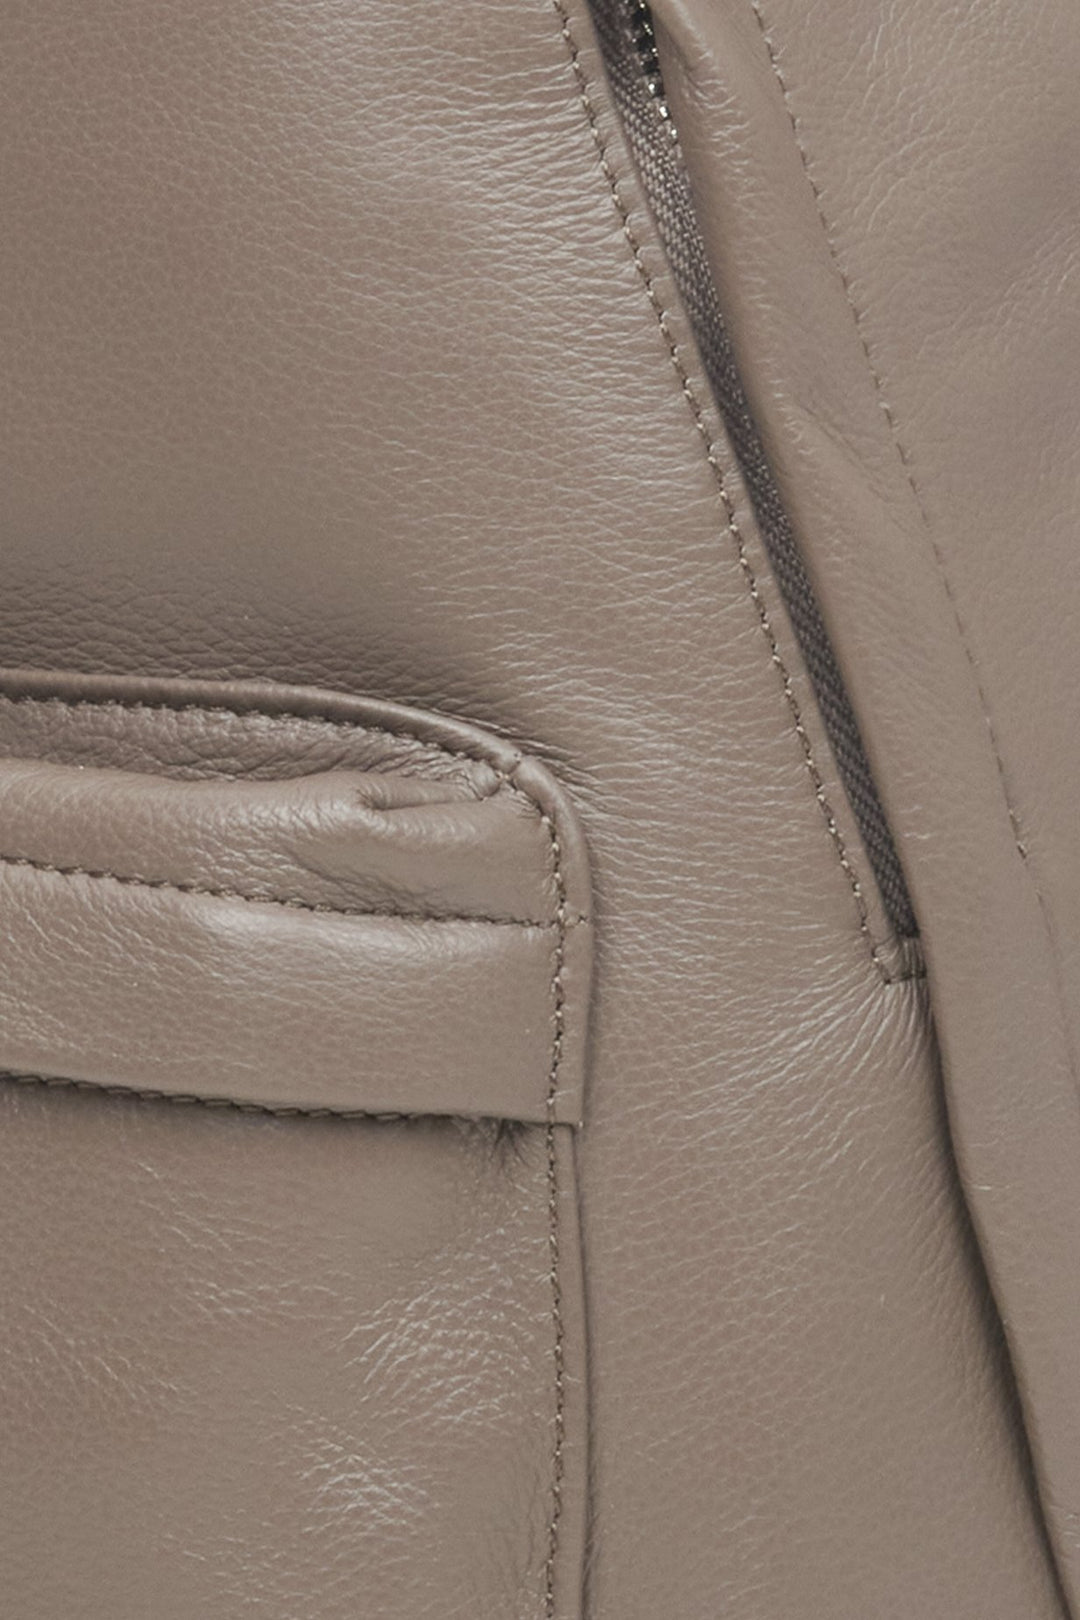 Duży, szarobrązowy plecak damski ze skóry naturalnej Estro - zbliżenie na detale.